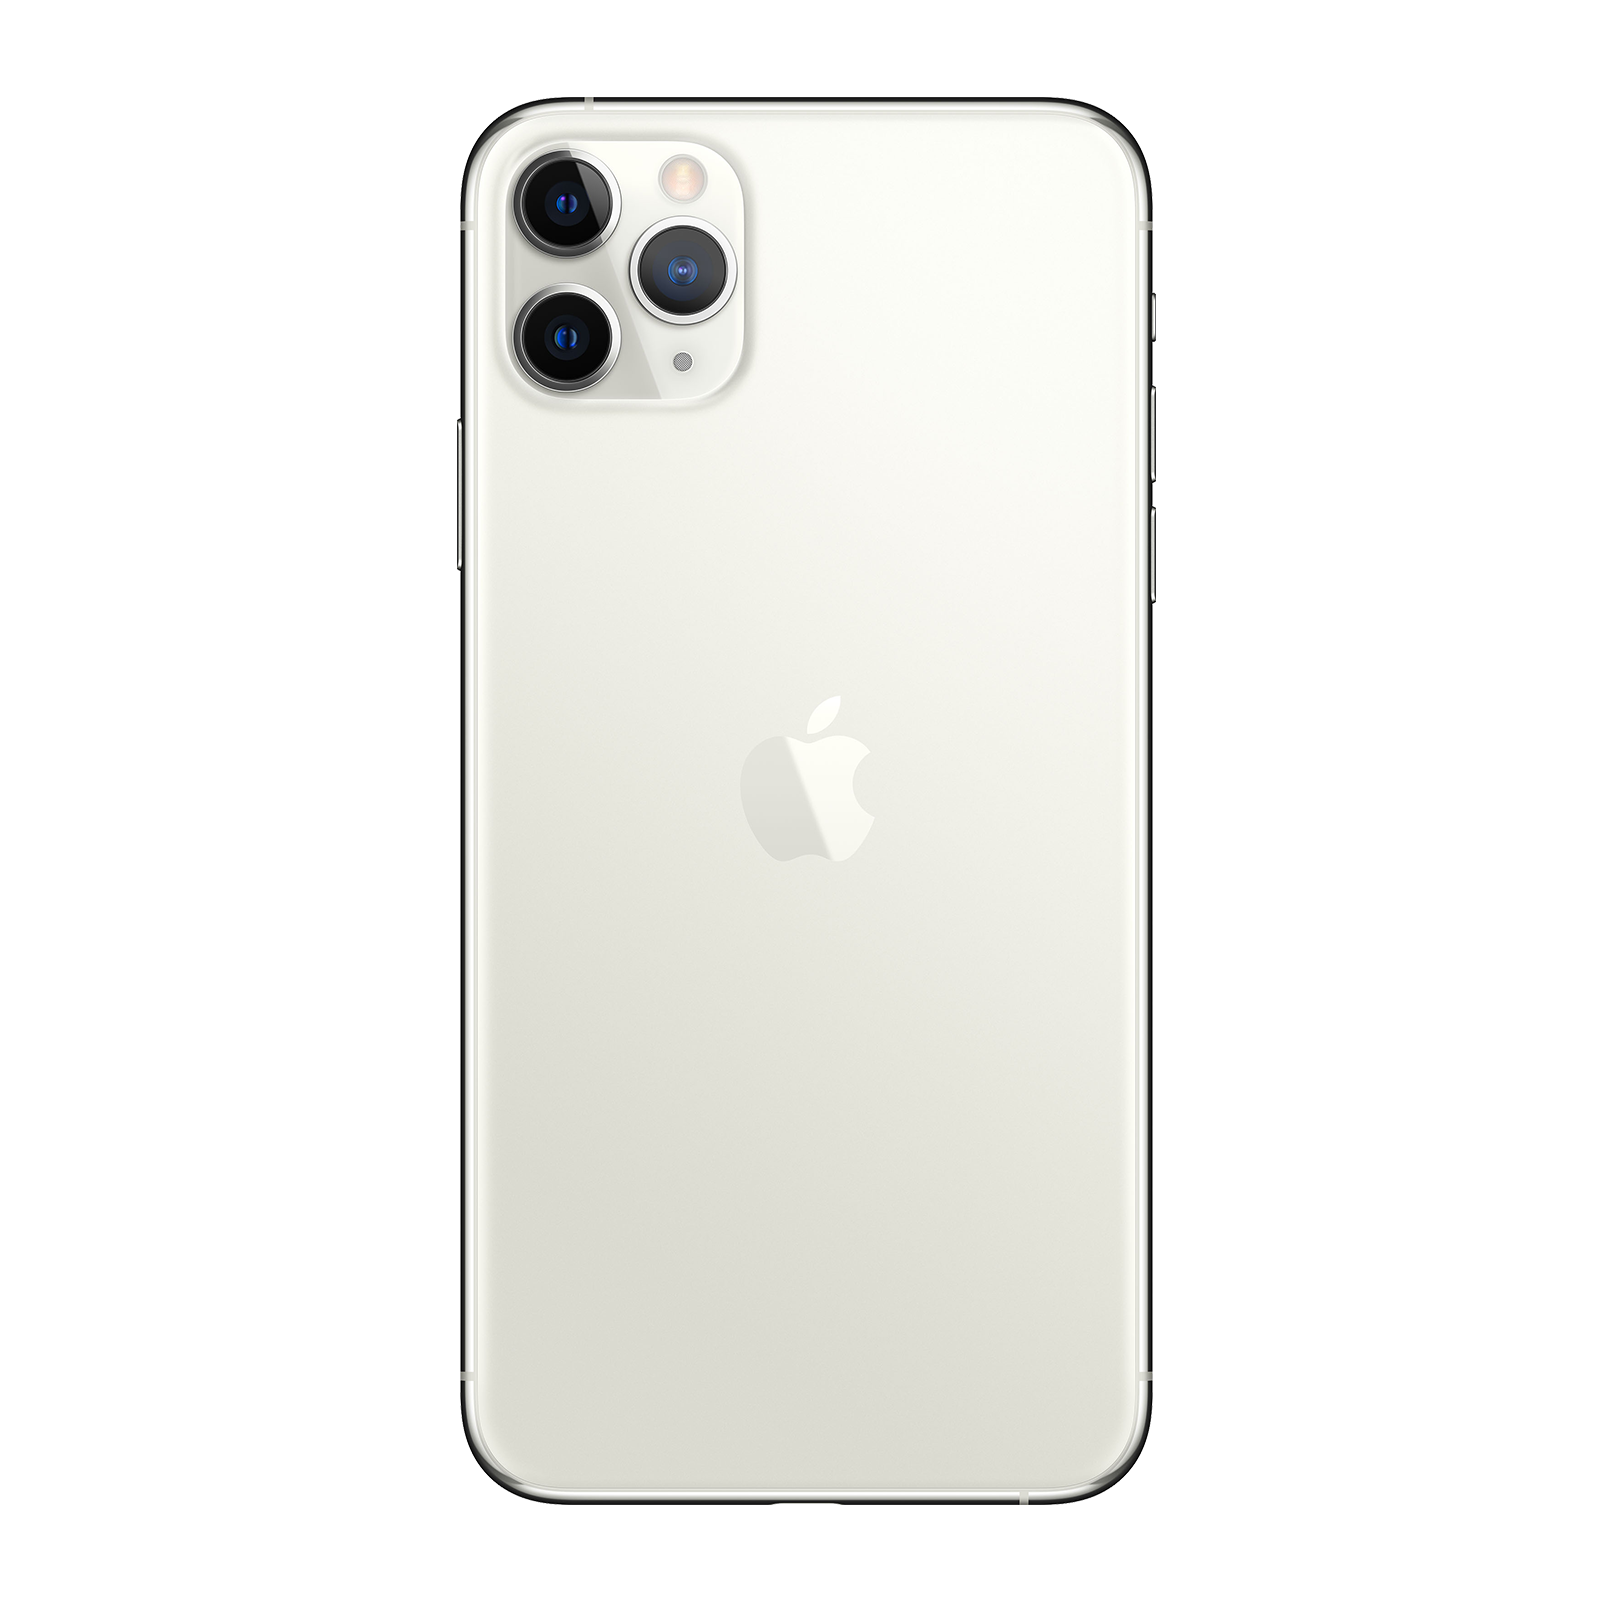 Apple iPhone 11 Pro Max 64GB Silver Very Good - Unlocked